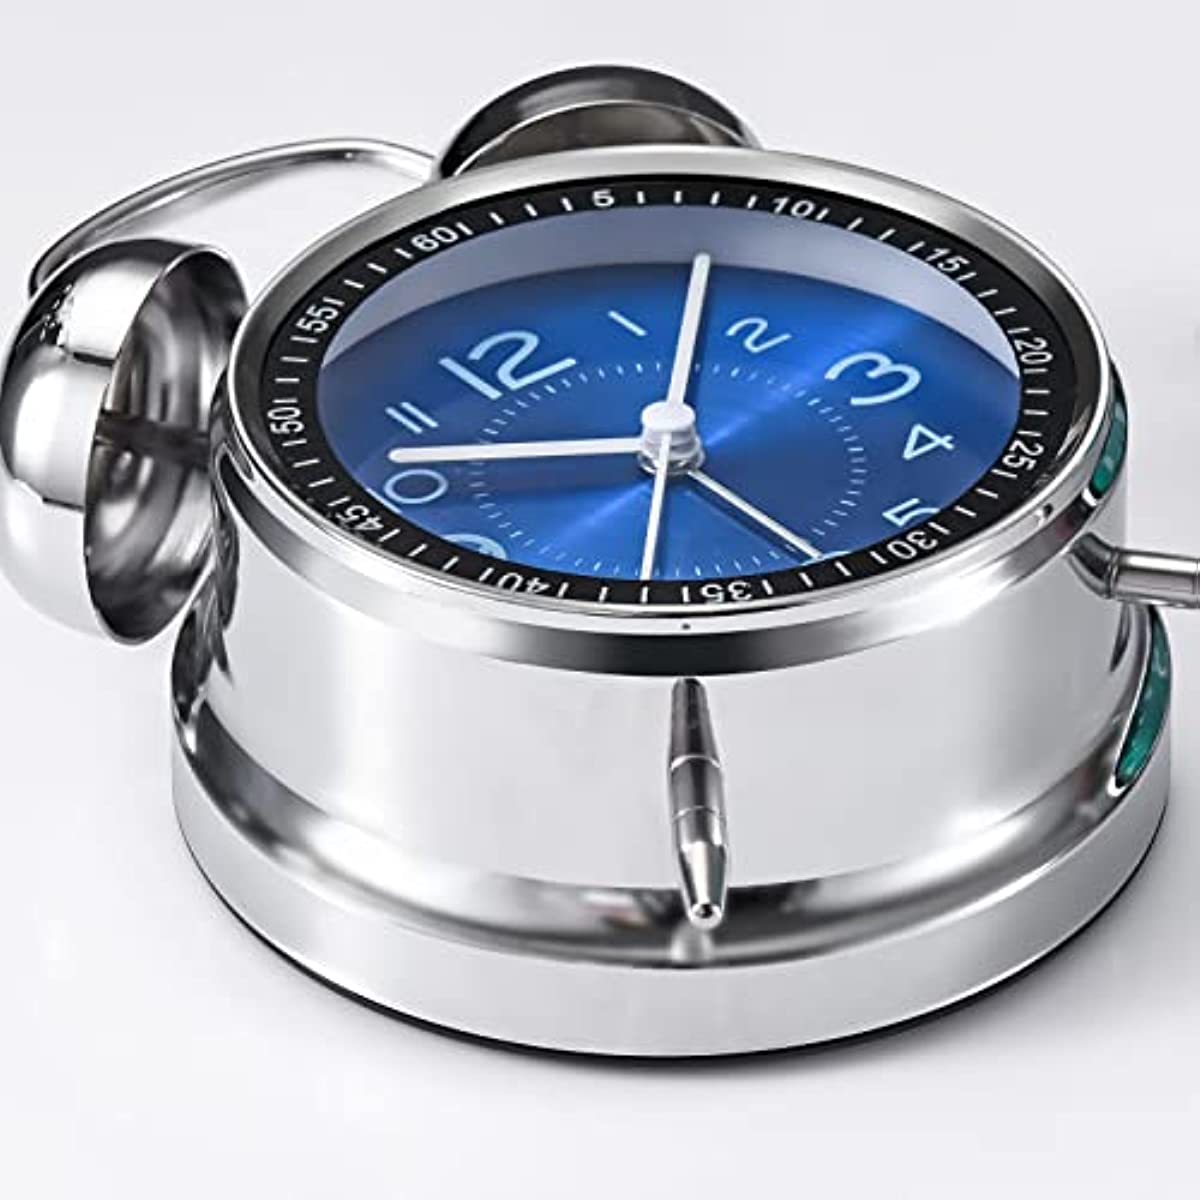  Bernhard Products Reloj despertador analógico de doble campana  de 4 pulgadas, metal plateado extra fuerte, de cuarzo, funciona con pilas  con luz de fondo, silencioso, sin tictac, para mesita de noche, 